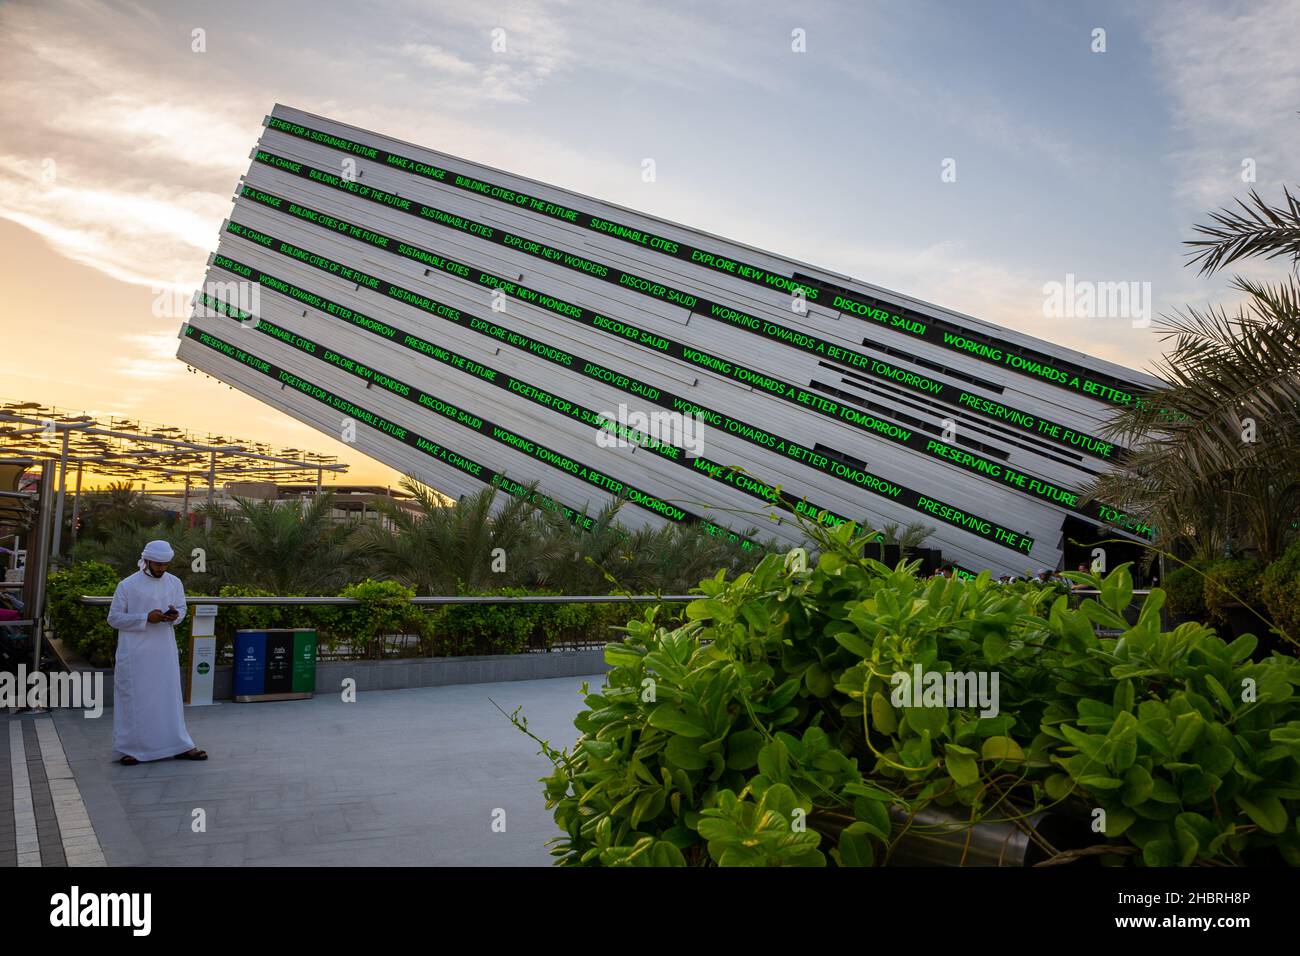 Dubai, Emiratos Árabes Unidos, 09.12.2021. Pabellón de Arabia Saudita en la Expo 2020 de Dubai, el segundo pabellón más grande de la Expo con subtítulos iluminados en verde. Foto de stock